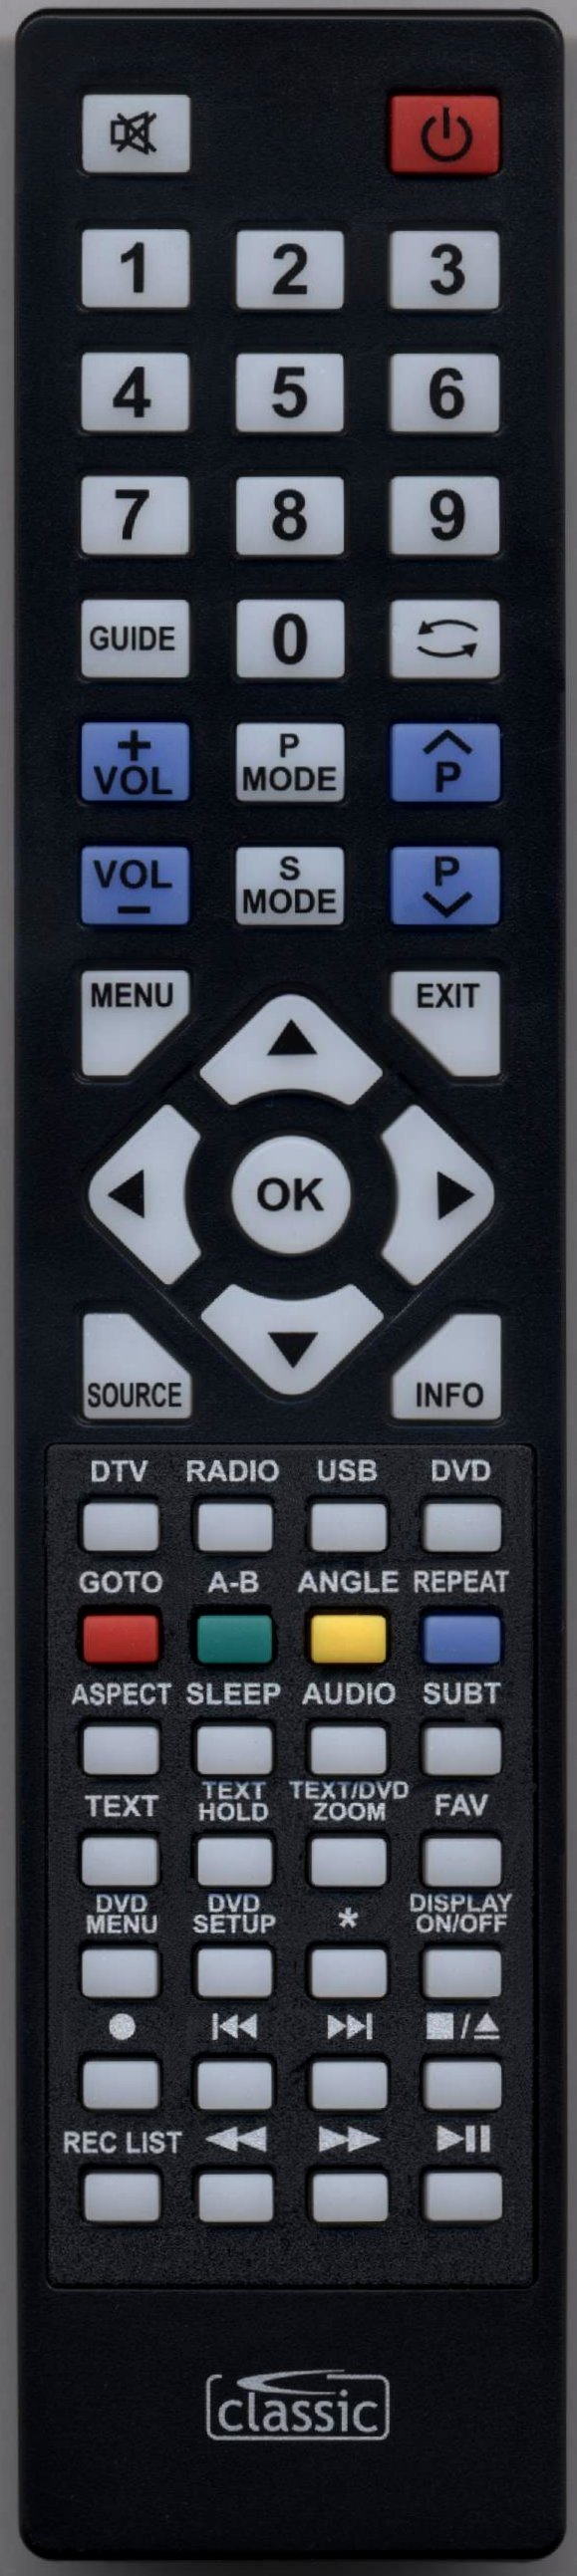 JMB JT0250003/01 Remote Control Alternative